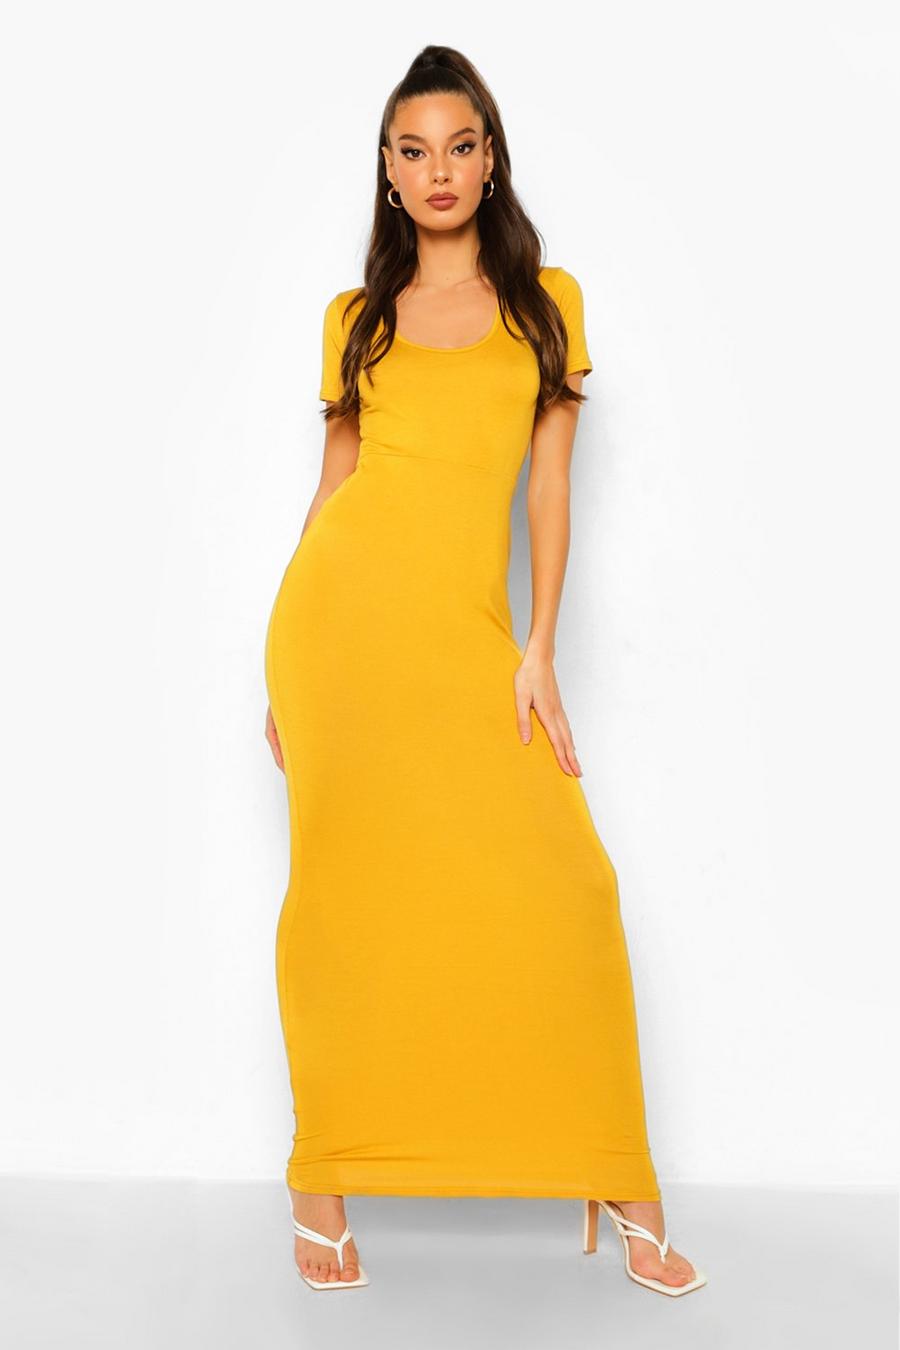 Mustard yellow Scoop Neck Short Sleeve Maxi Dress